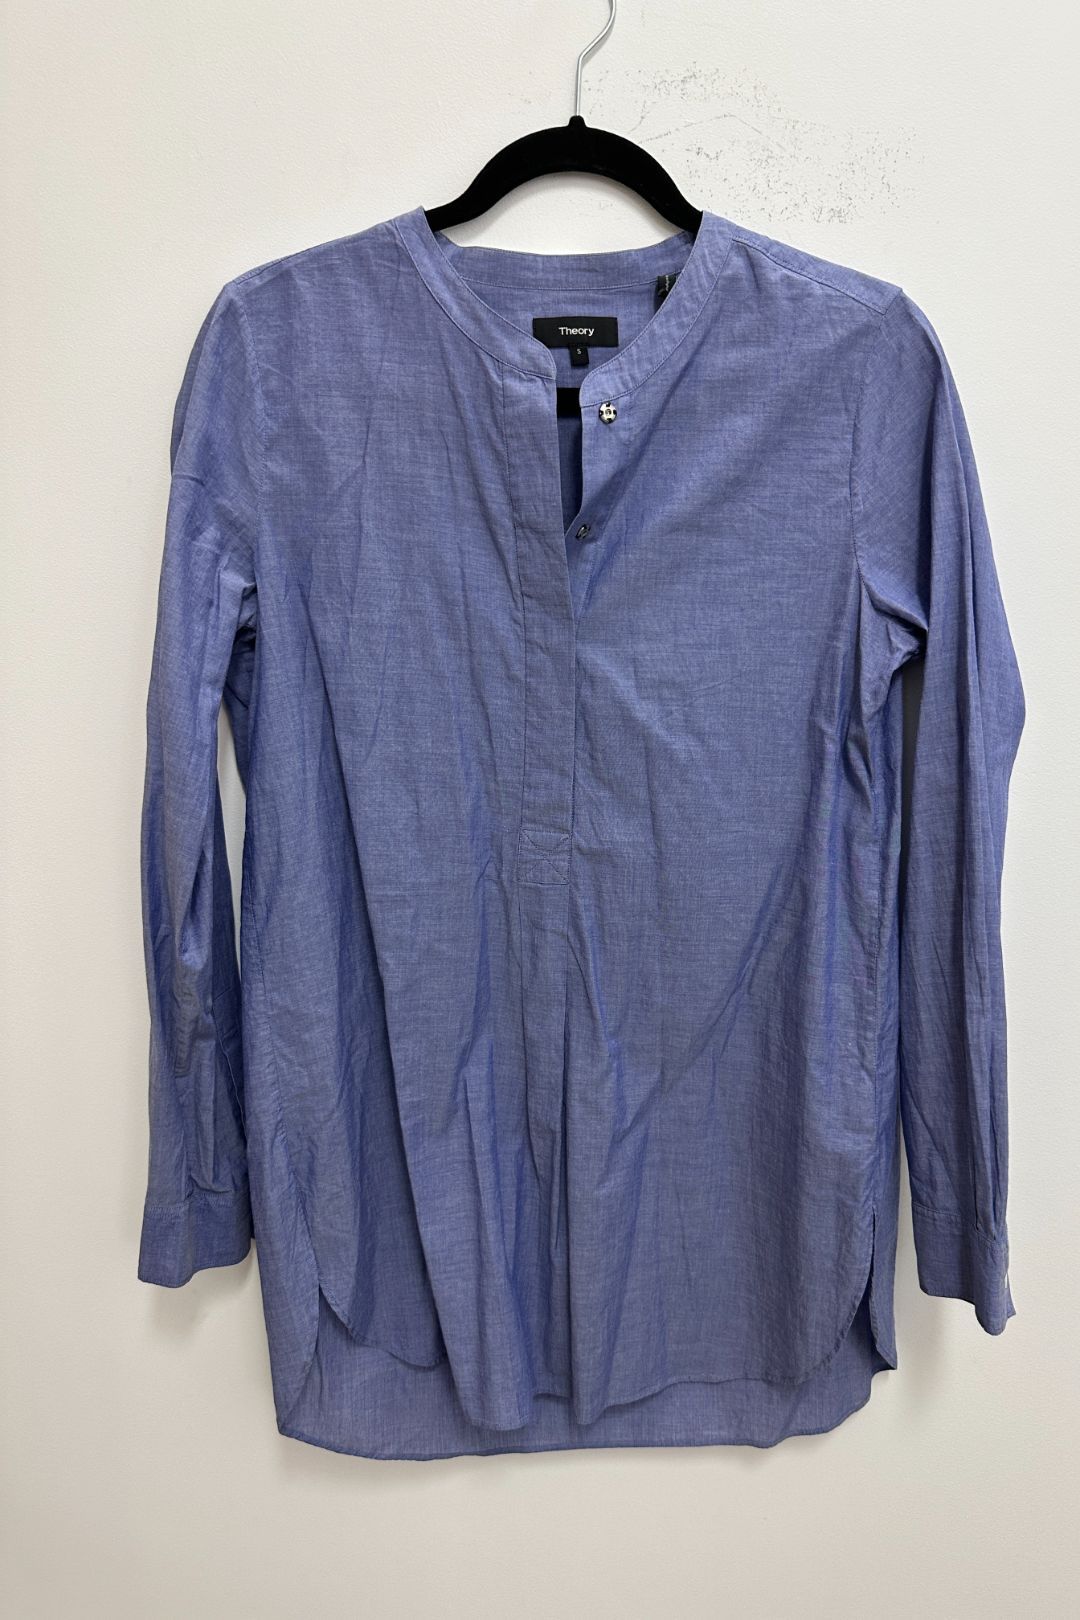 Theory - Collarless Blue Button-Down Shirt